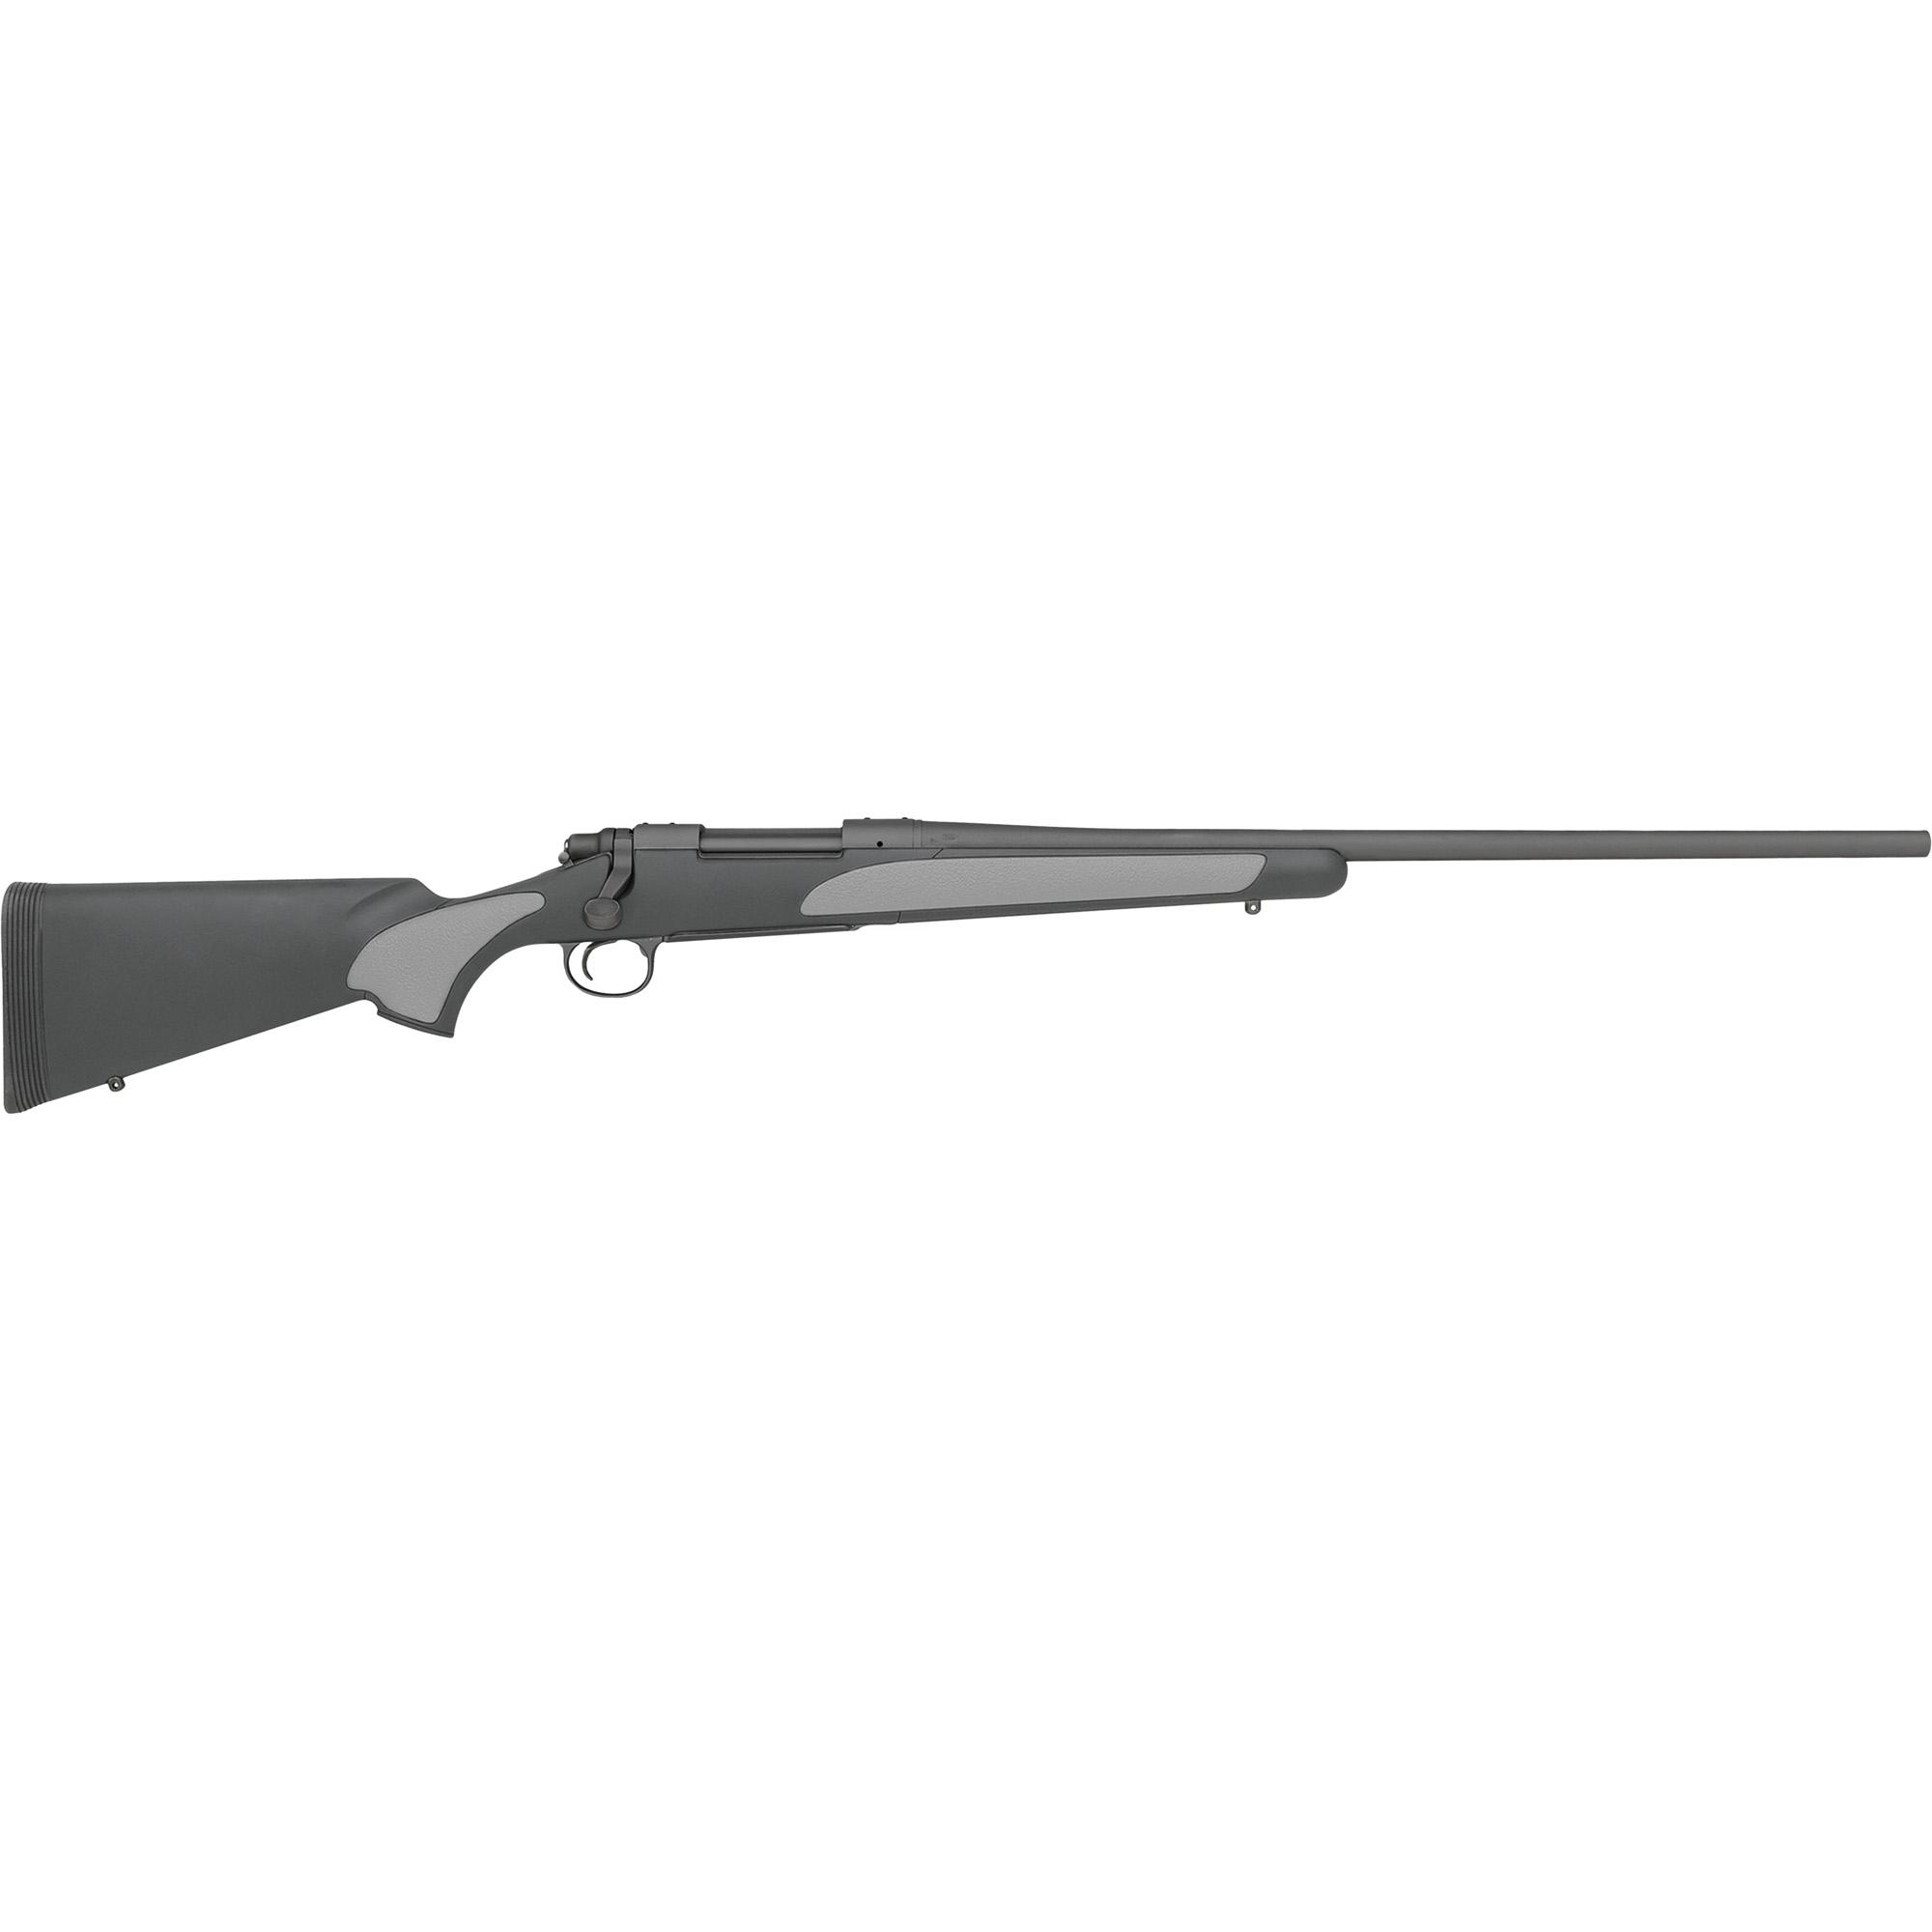  Remington 700 Sps 270win Special Purpose